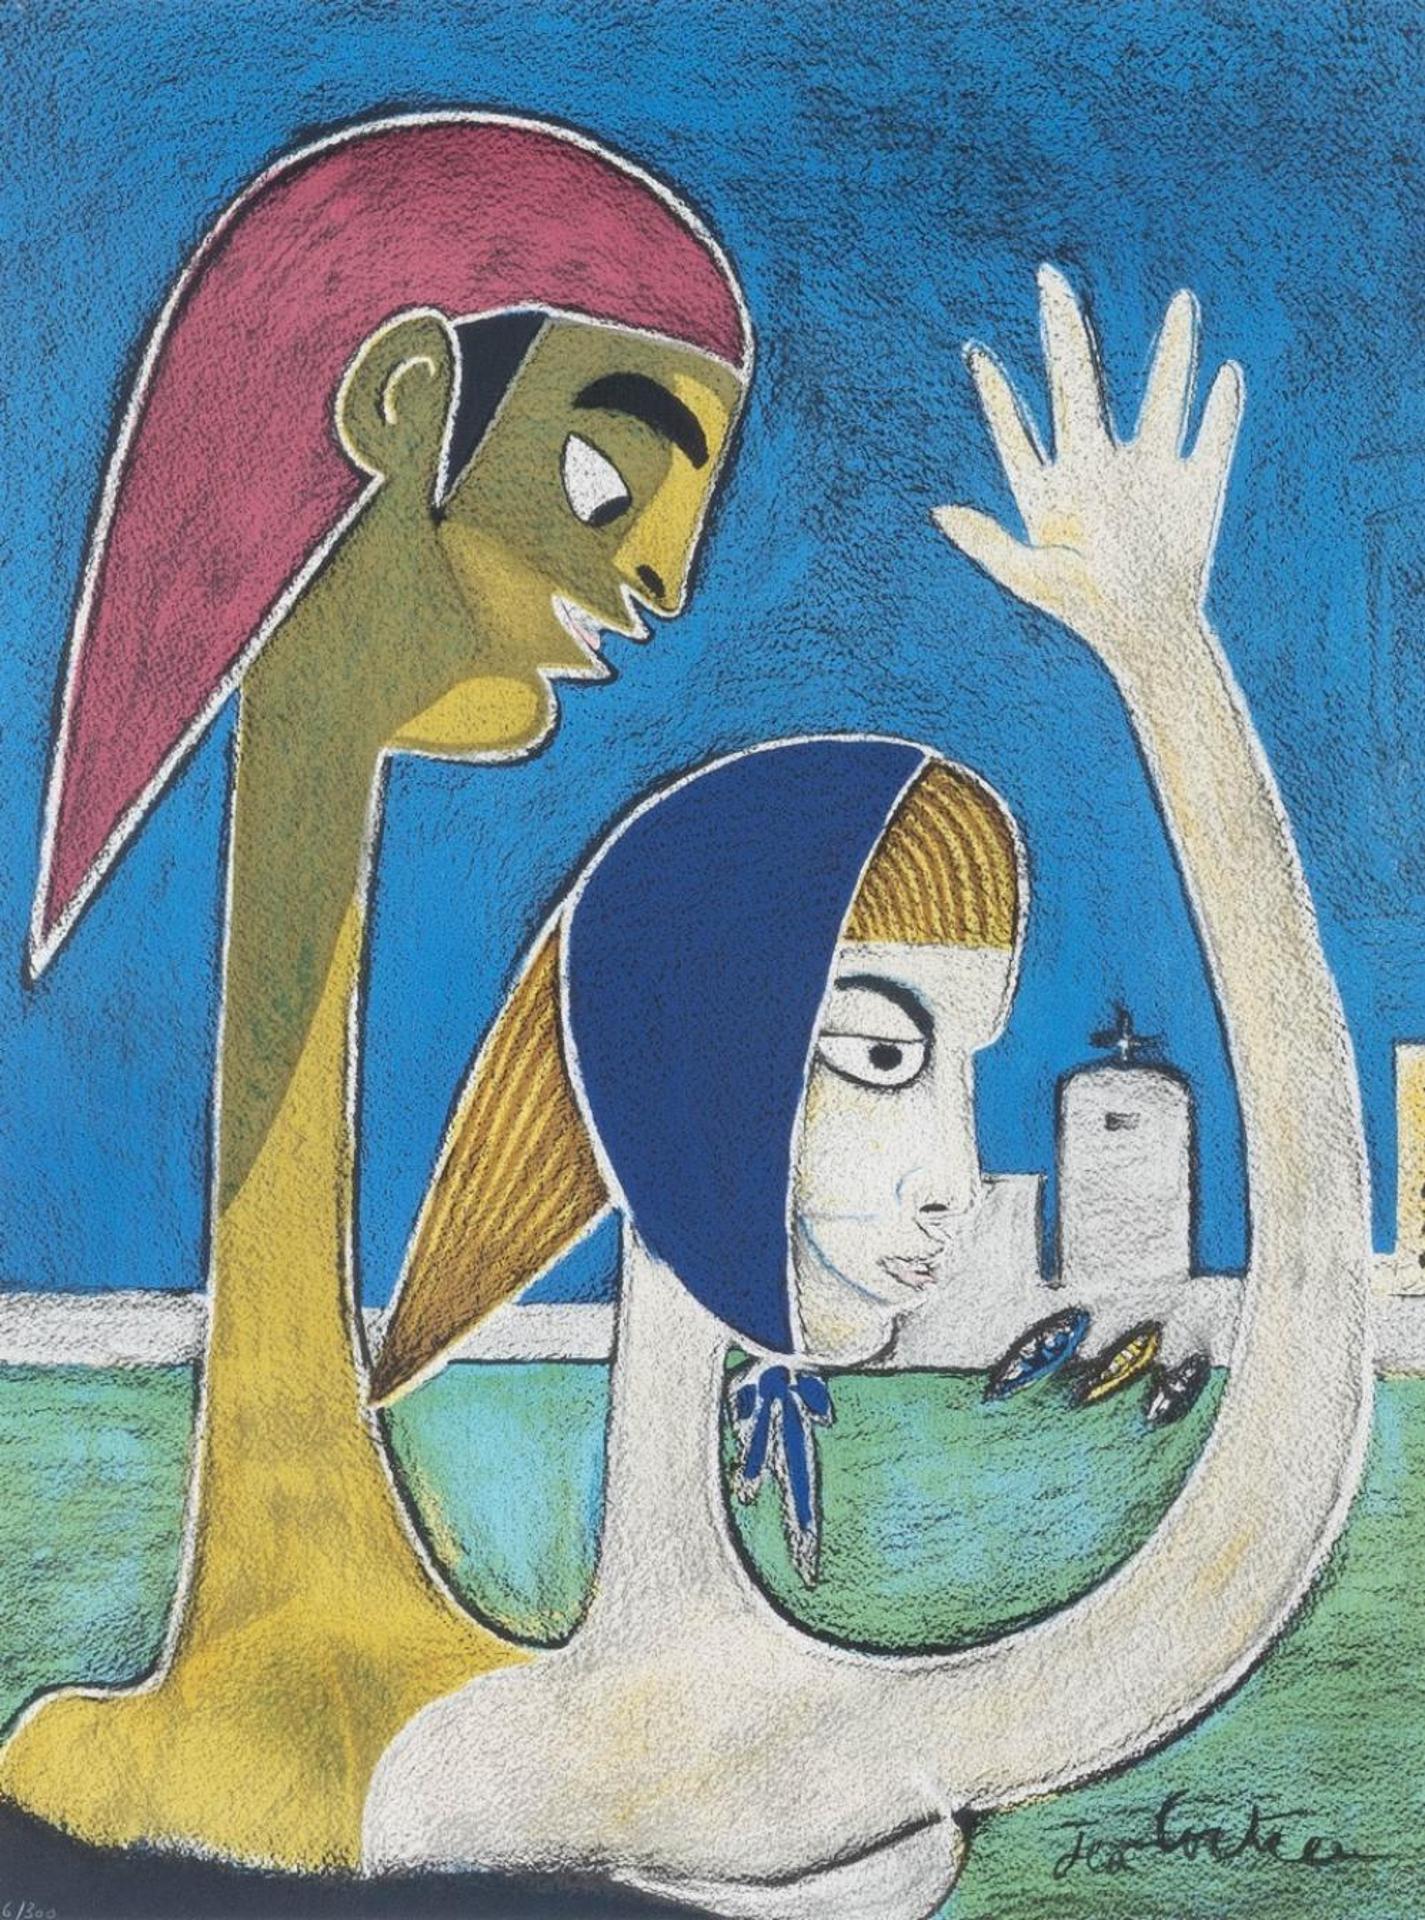 Jean Cocteau (1889-1963) - From the Innamorati Series